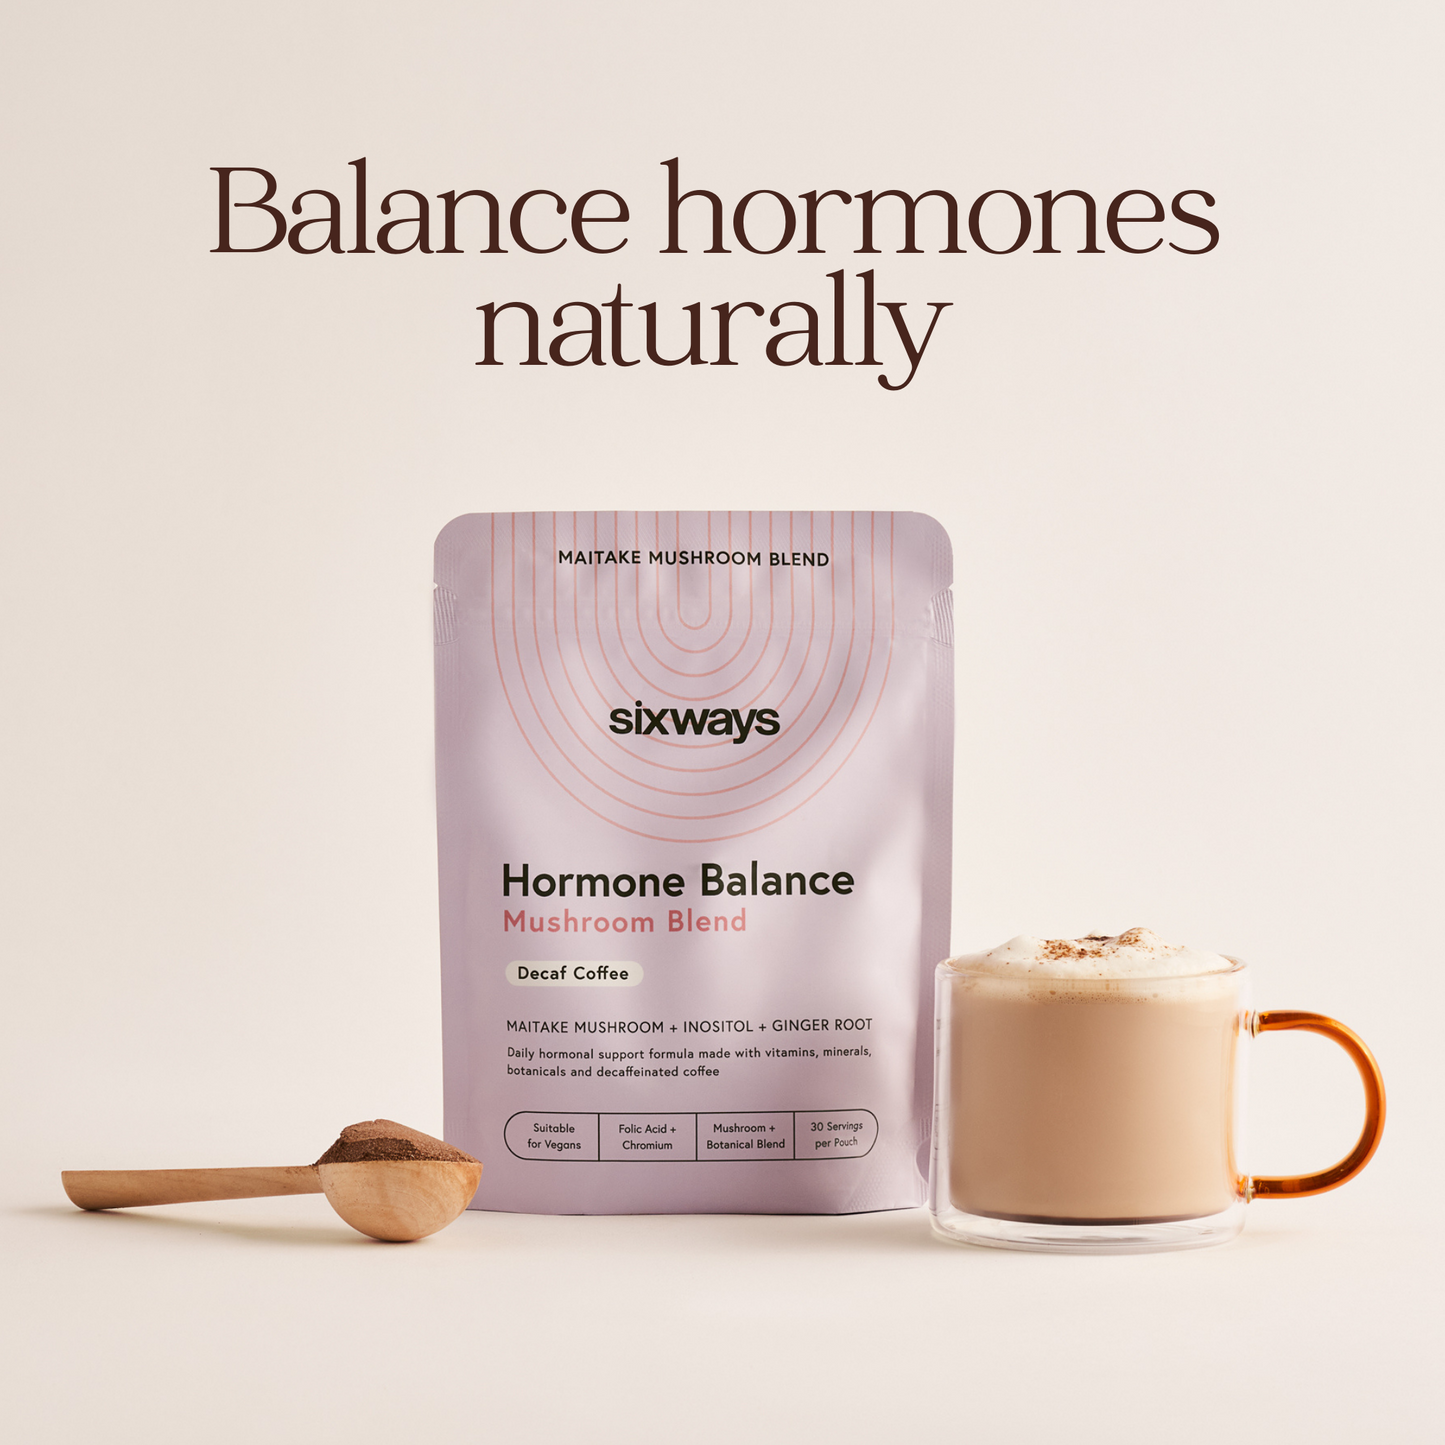 Hormone Balance Mushroom Blend